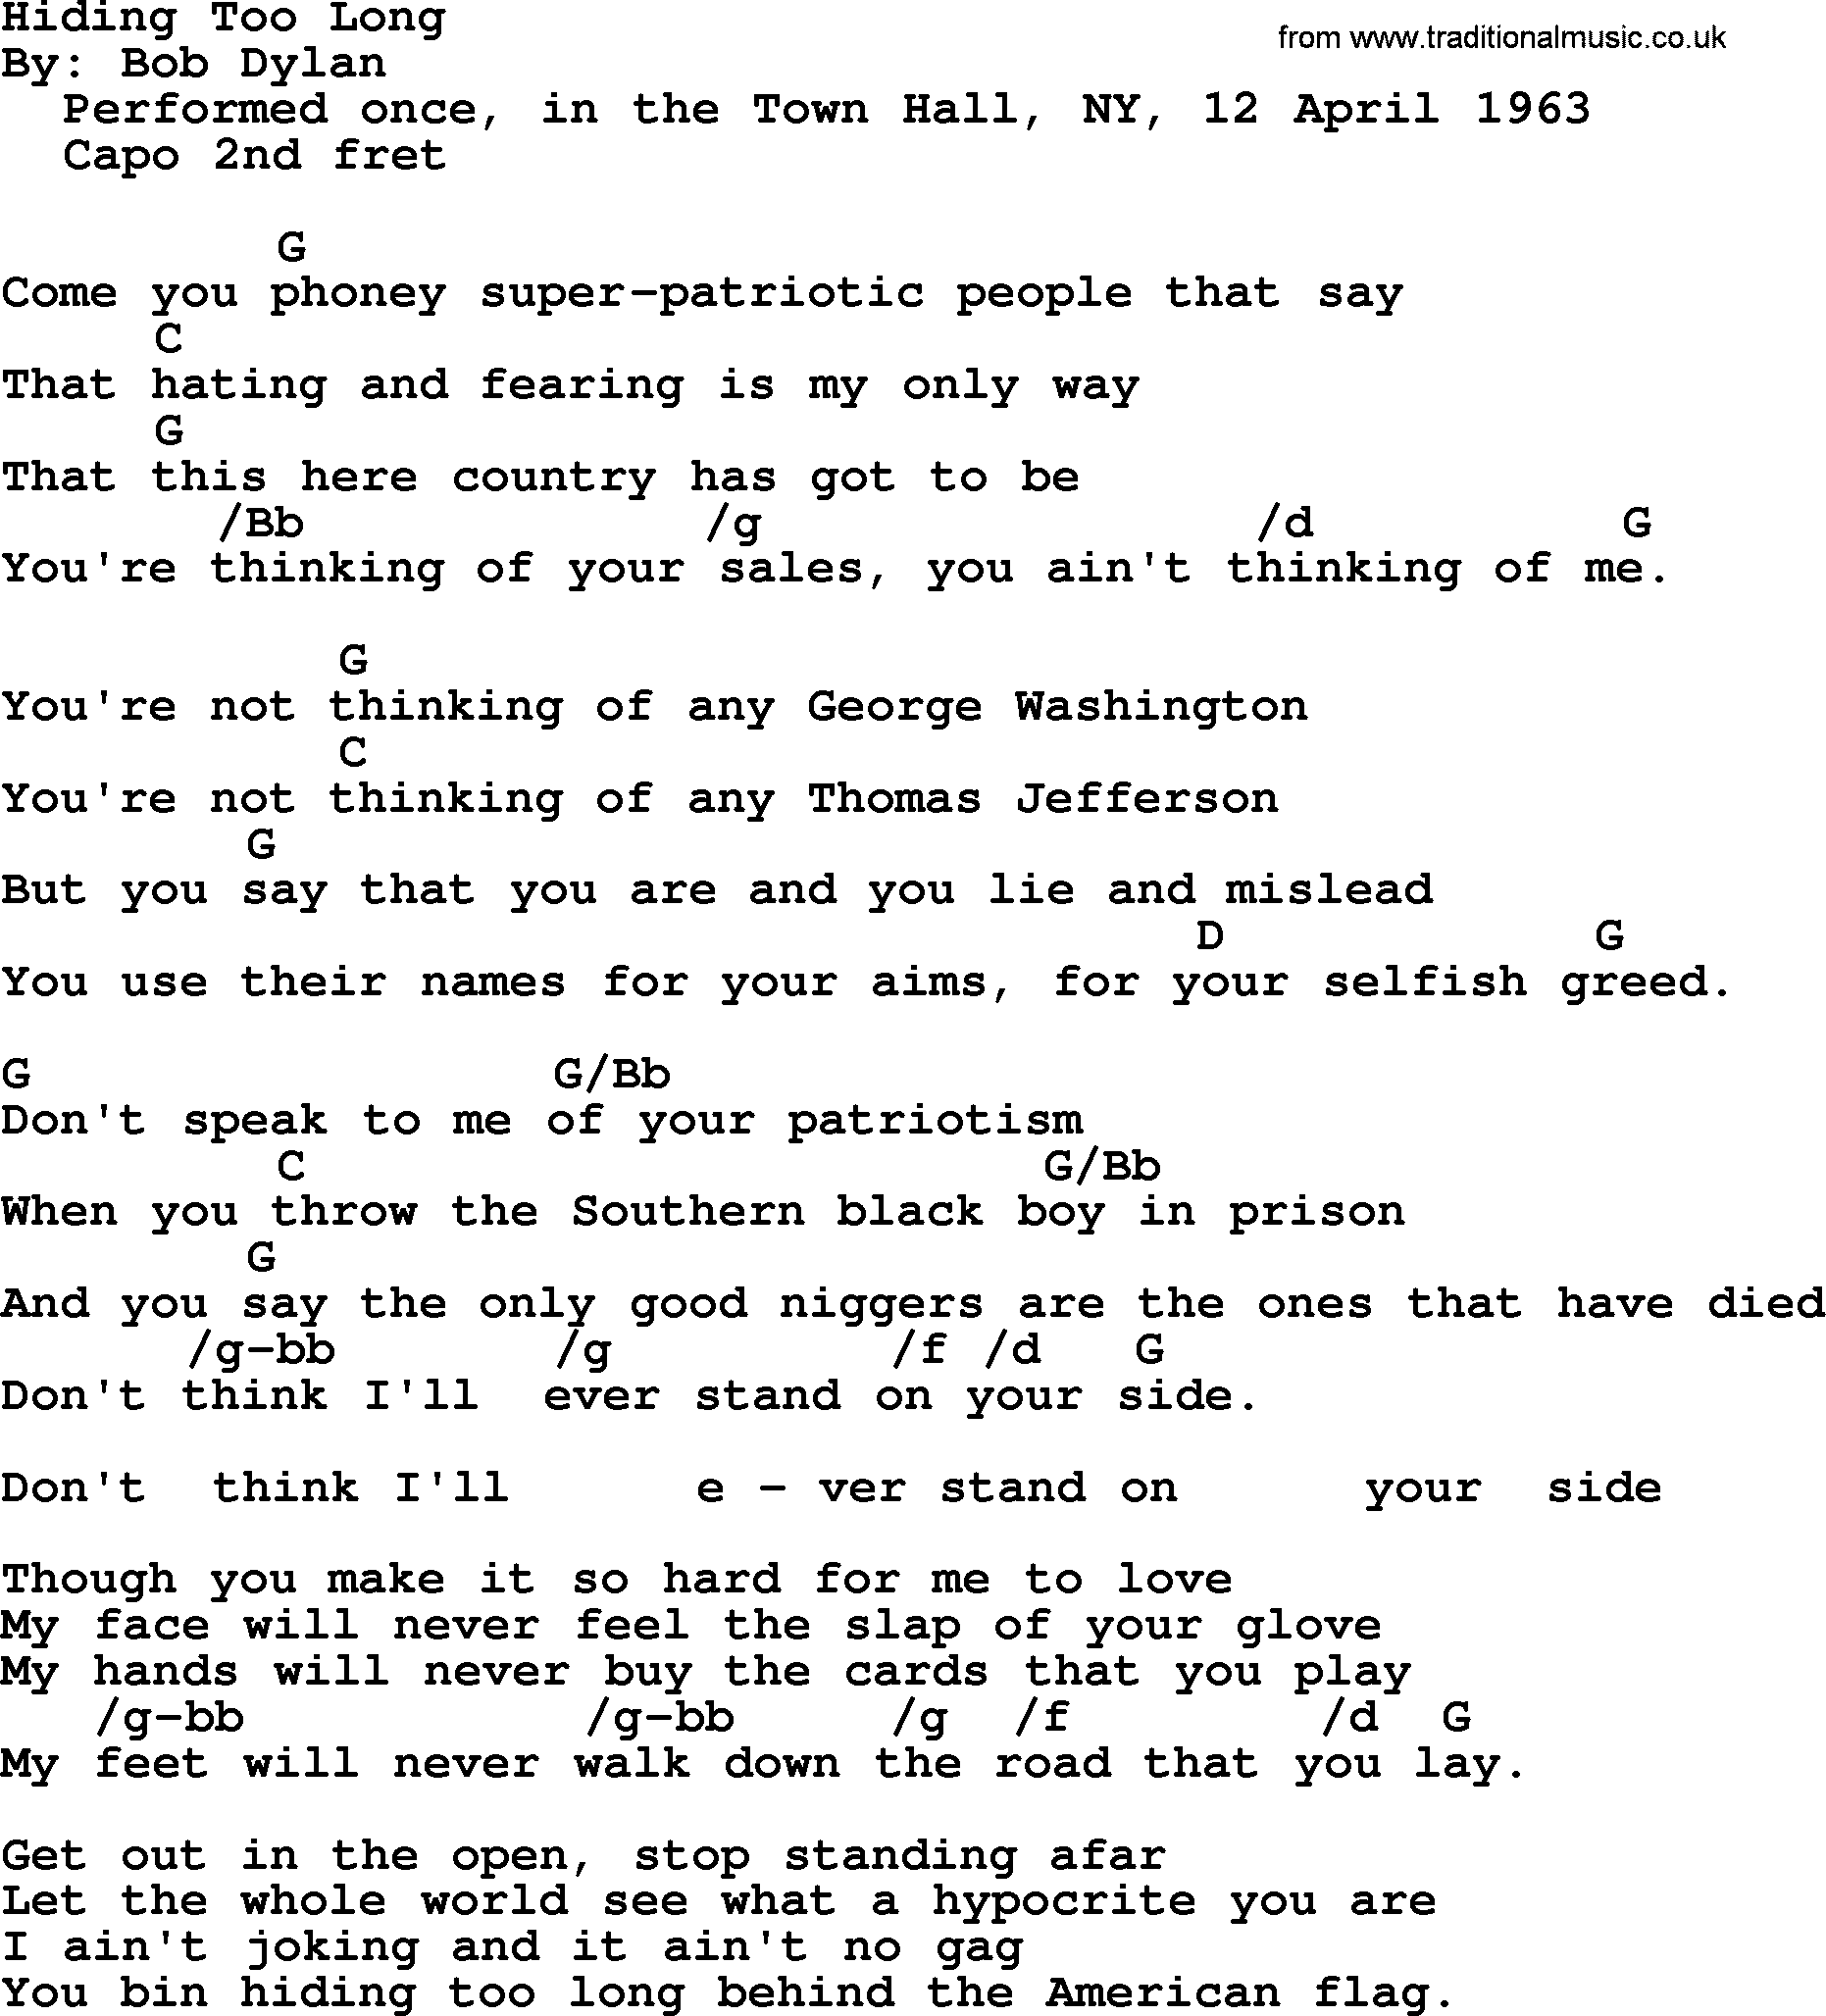 Bob Dylan song, lyrics with chords - Hiding Too Long